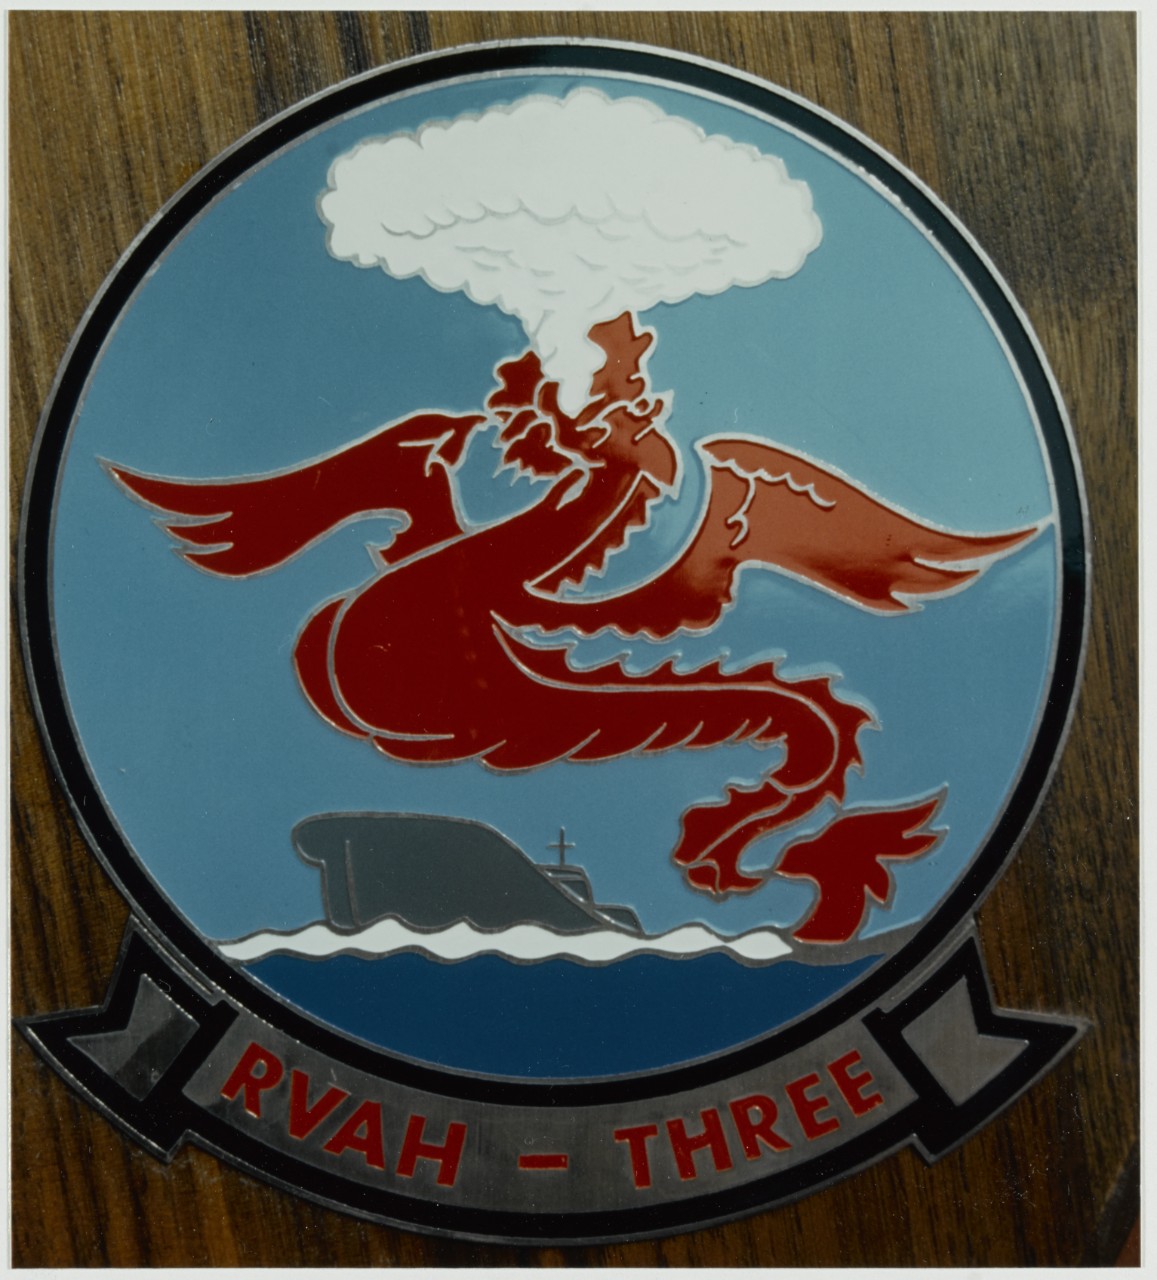 Insignia: Reconnaissance Attack Squadron Three (RVAH-3)